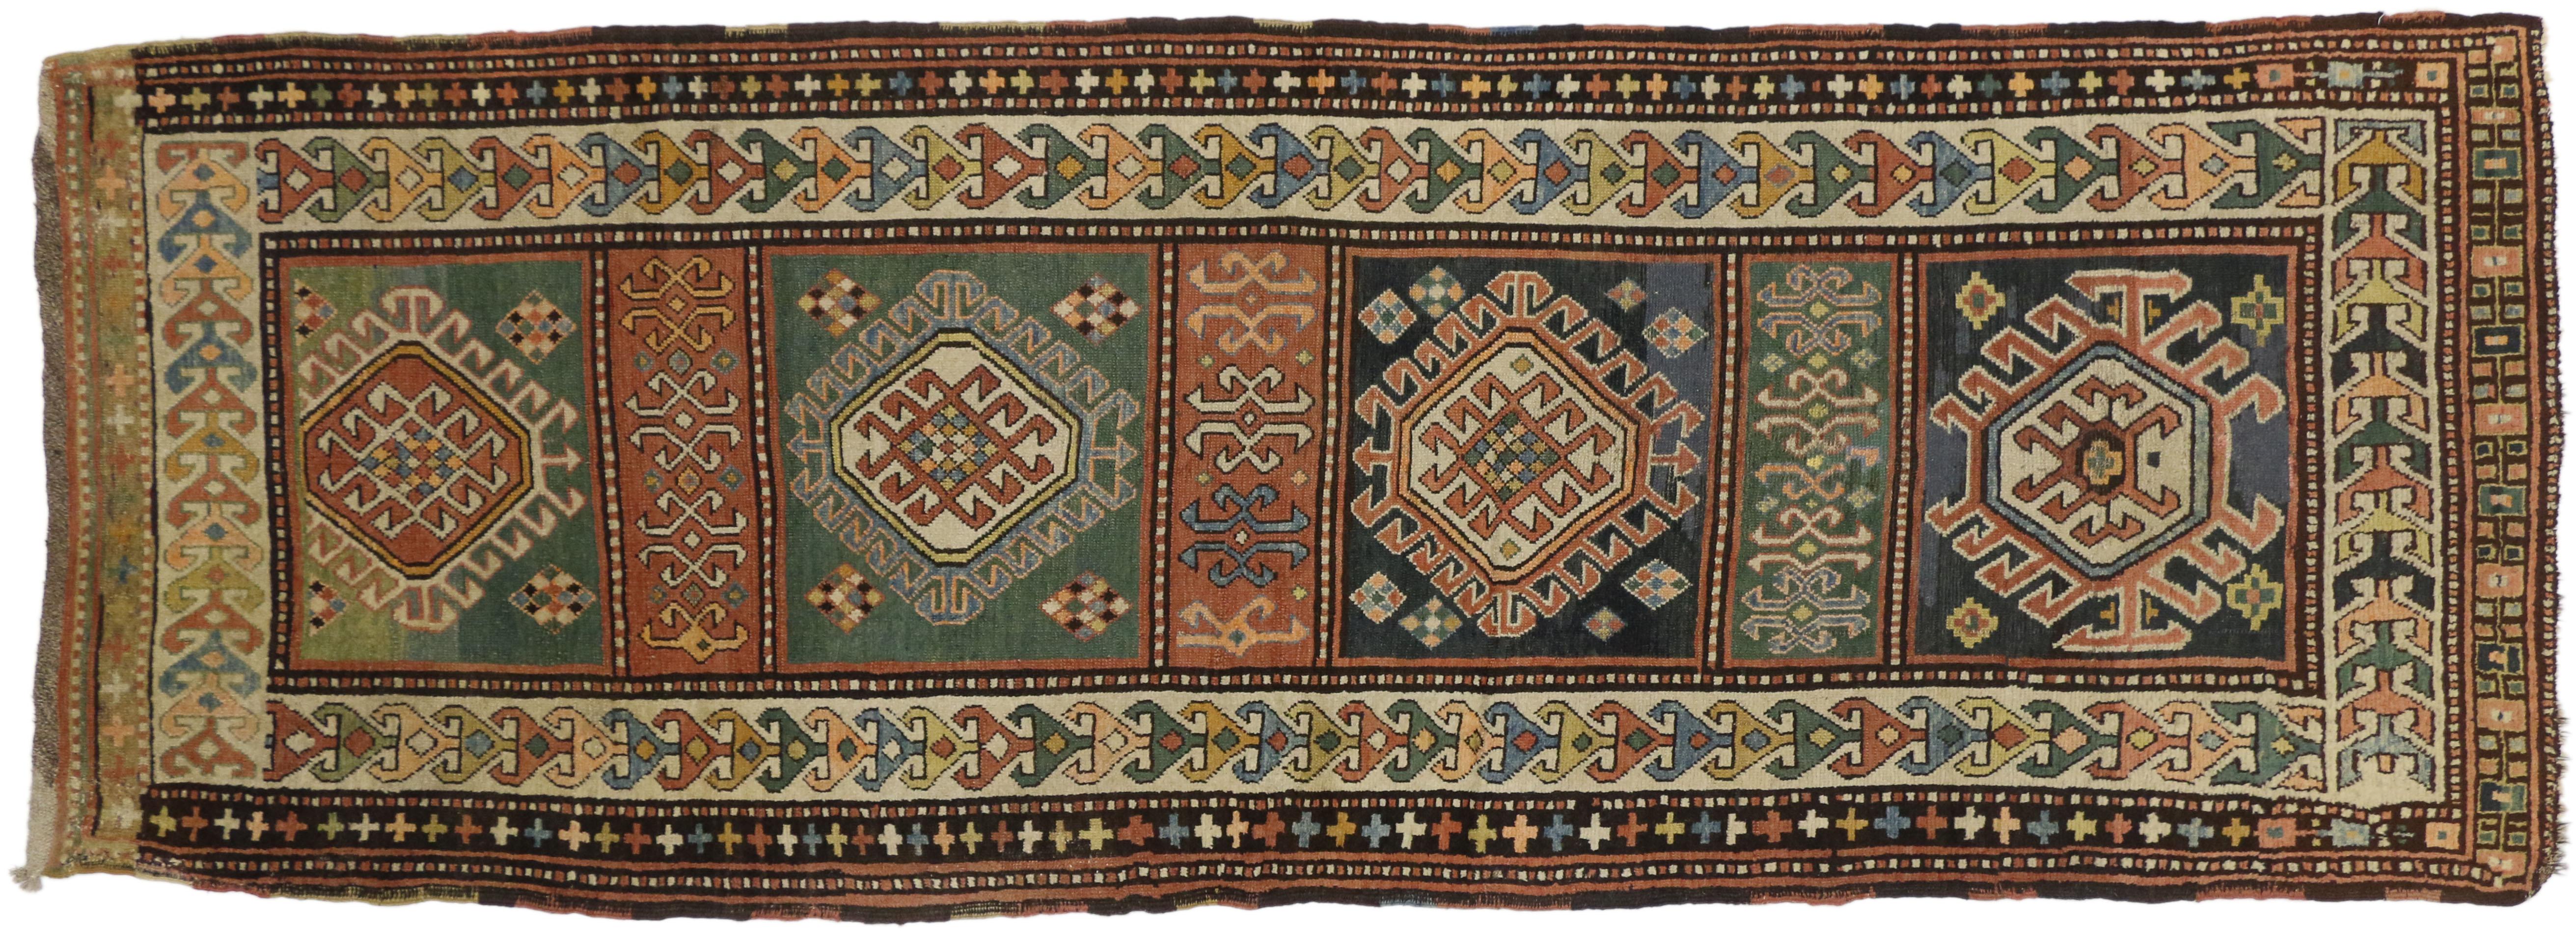 Wool Rustic Tribal Style Antique Caucasian Kazak Rug, Wide Hallway Runner